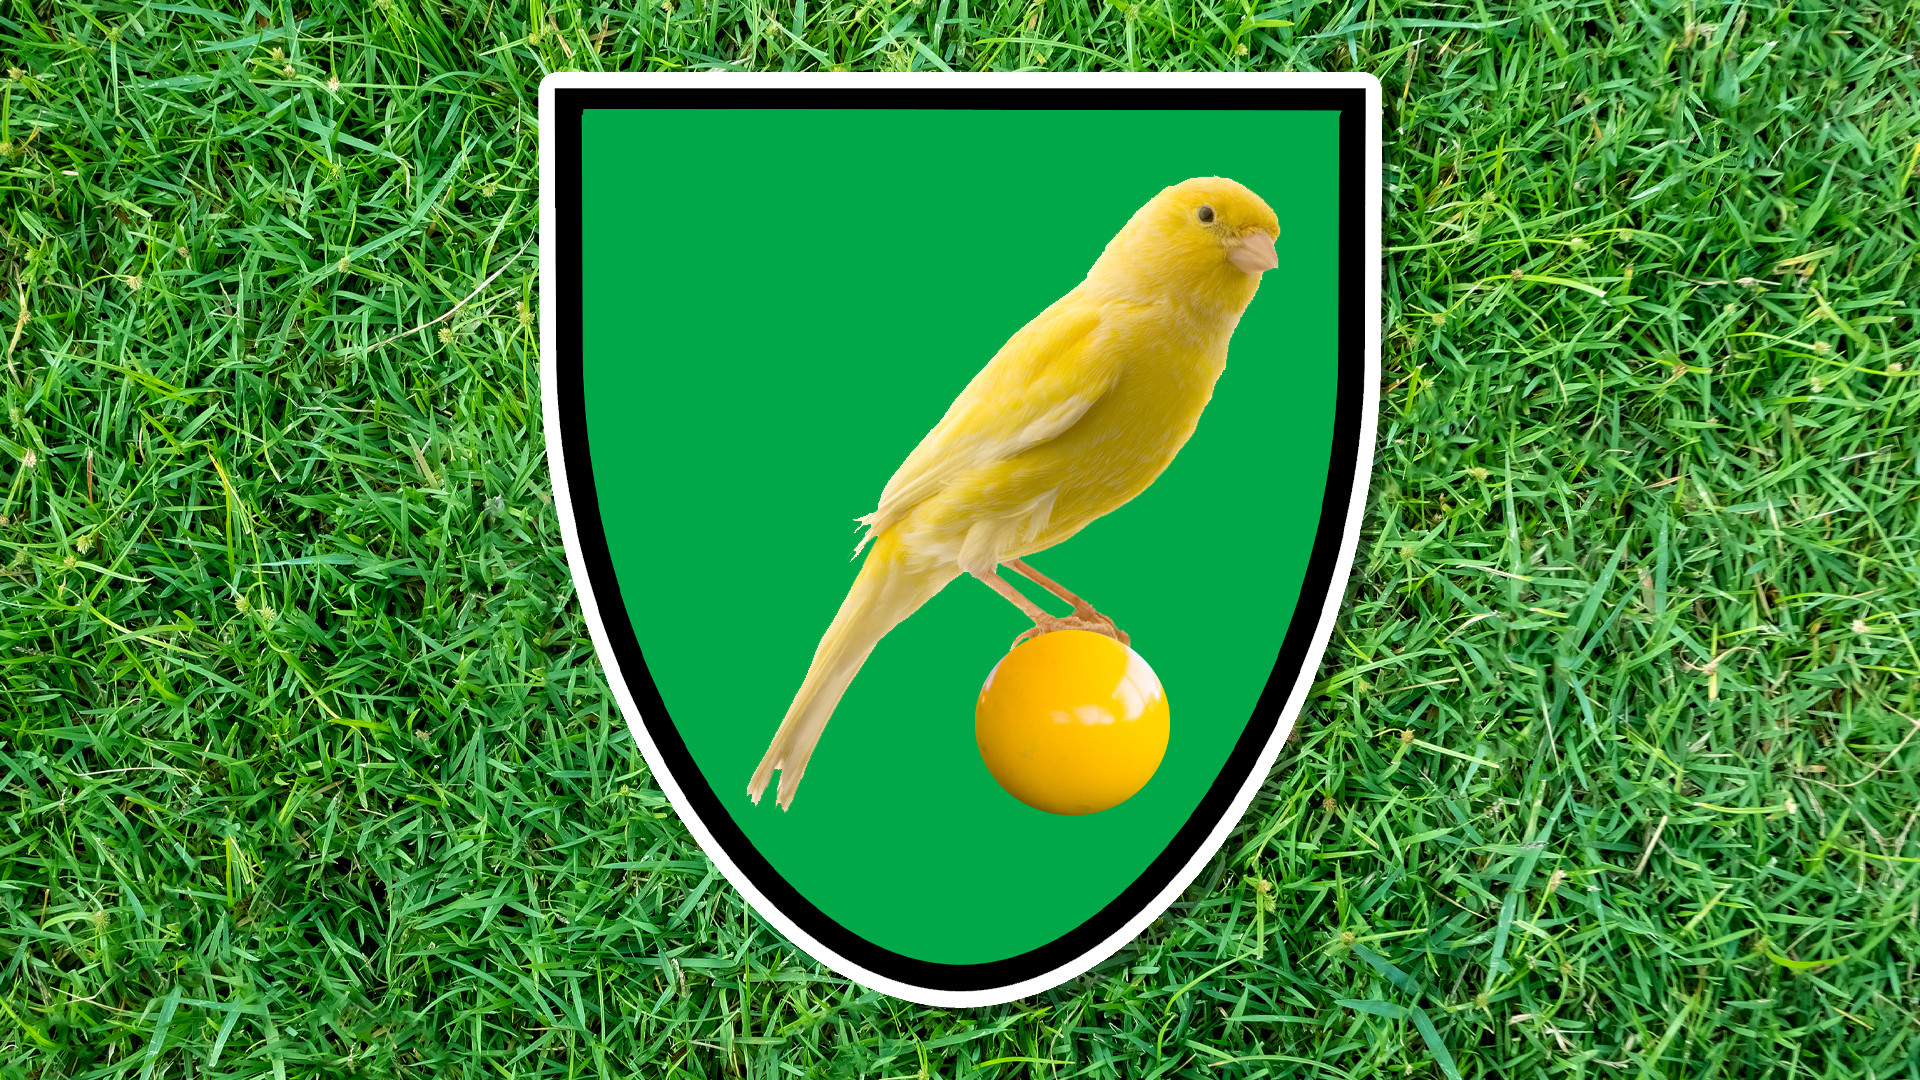 A yellow bird sits on a ball